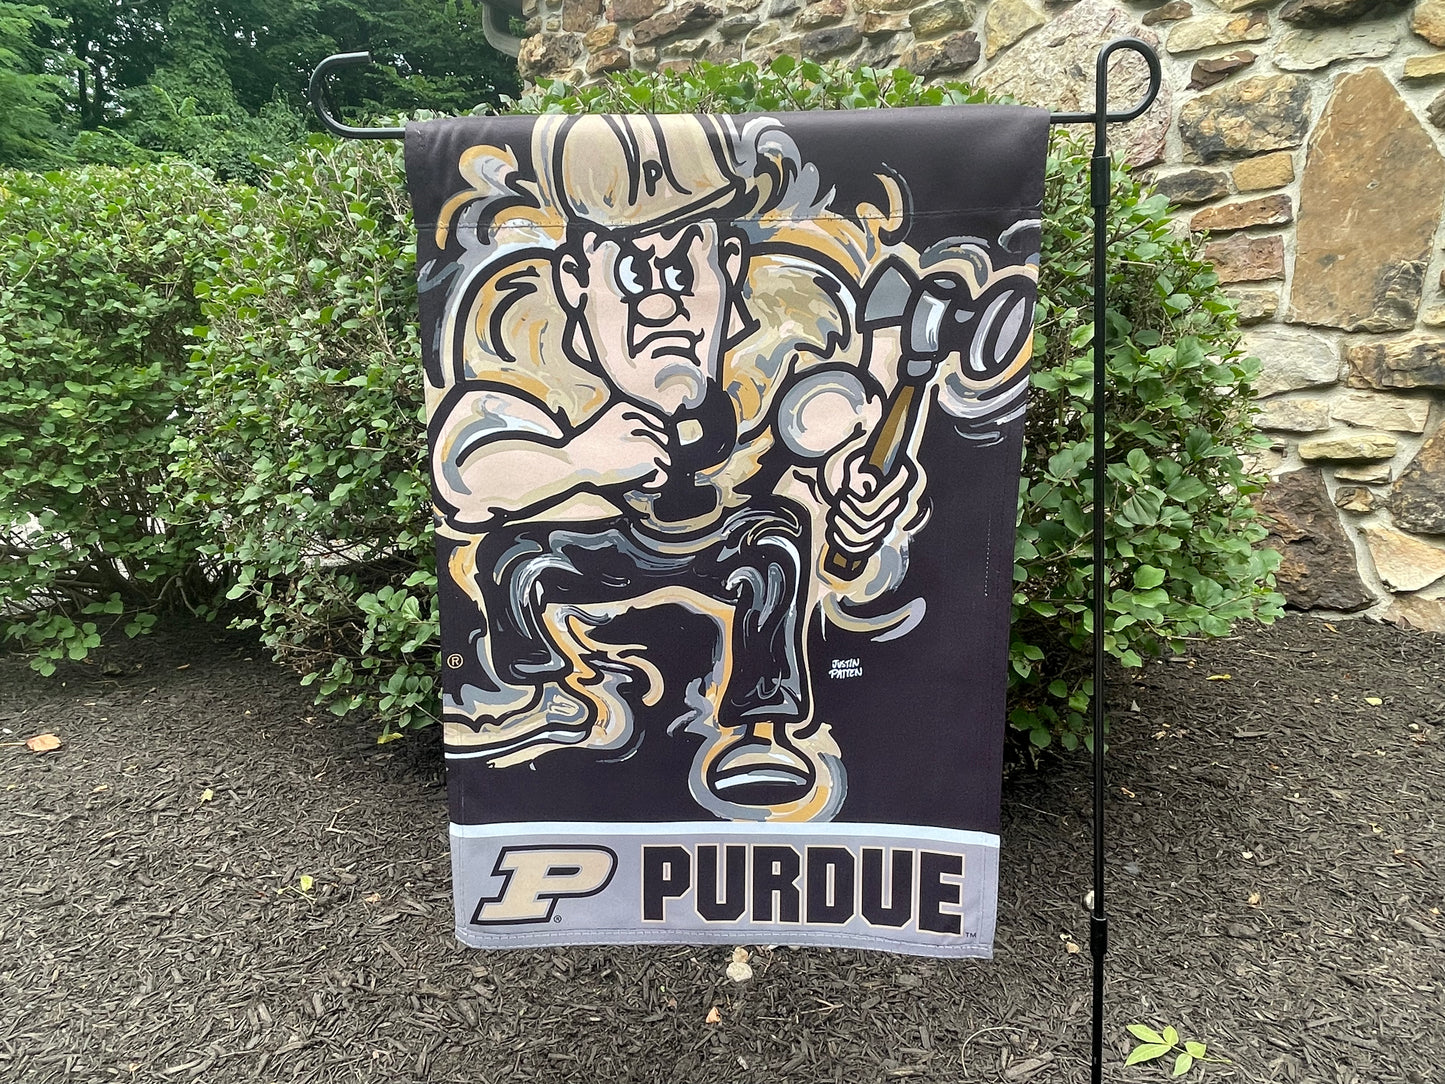 Purdue University Purdue Pete Garden Flag 12" x 18" by Justin Patten